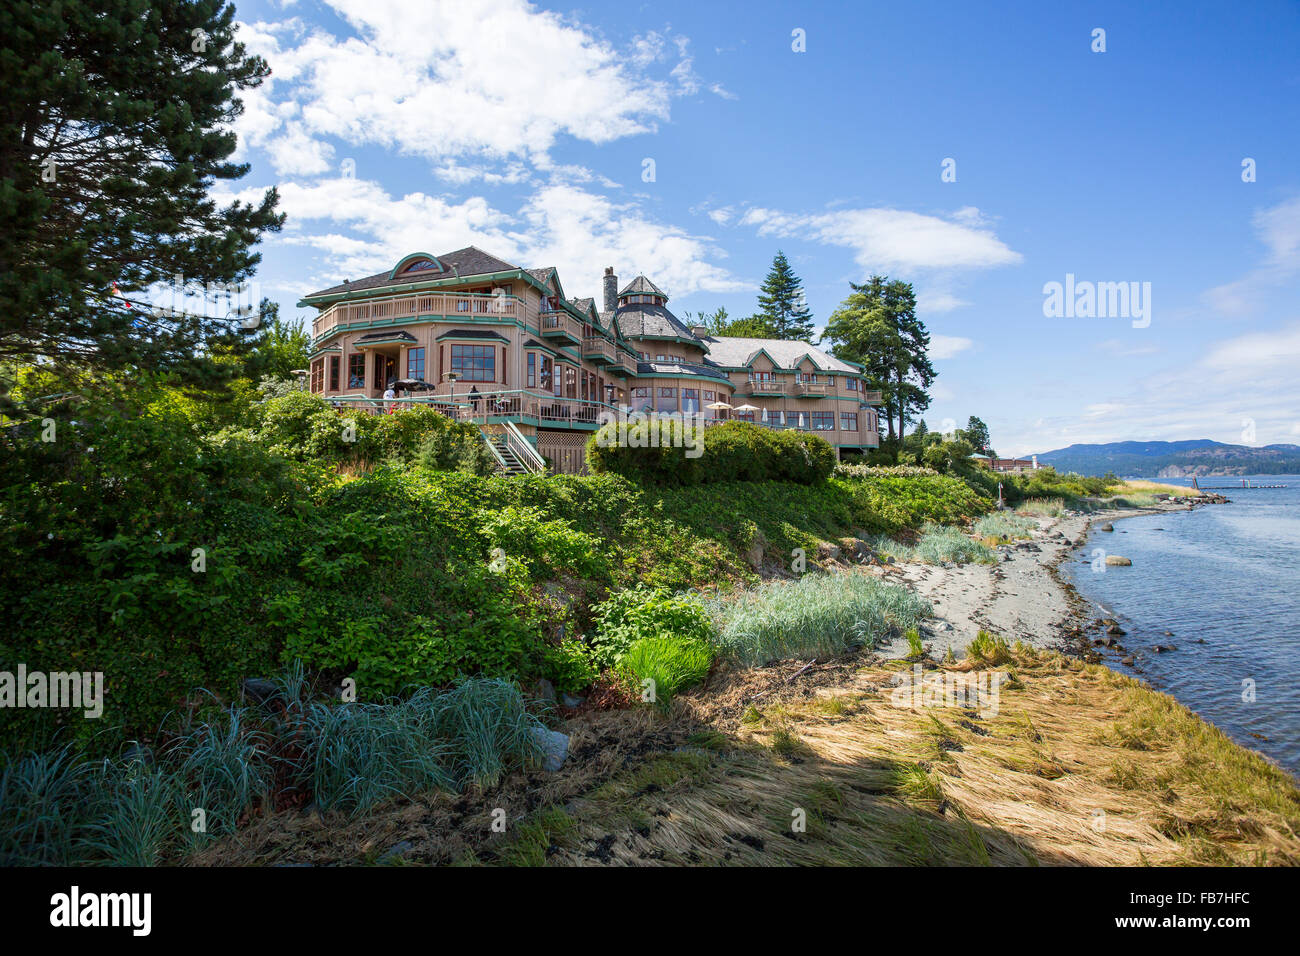 Nordamerika, Kanada, British Columbia, Vancouver Island, Campbell River, Maler Lodge Lachsfischen resort Stockfoto